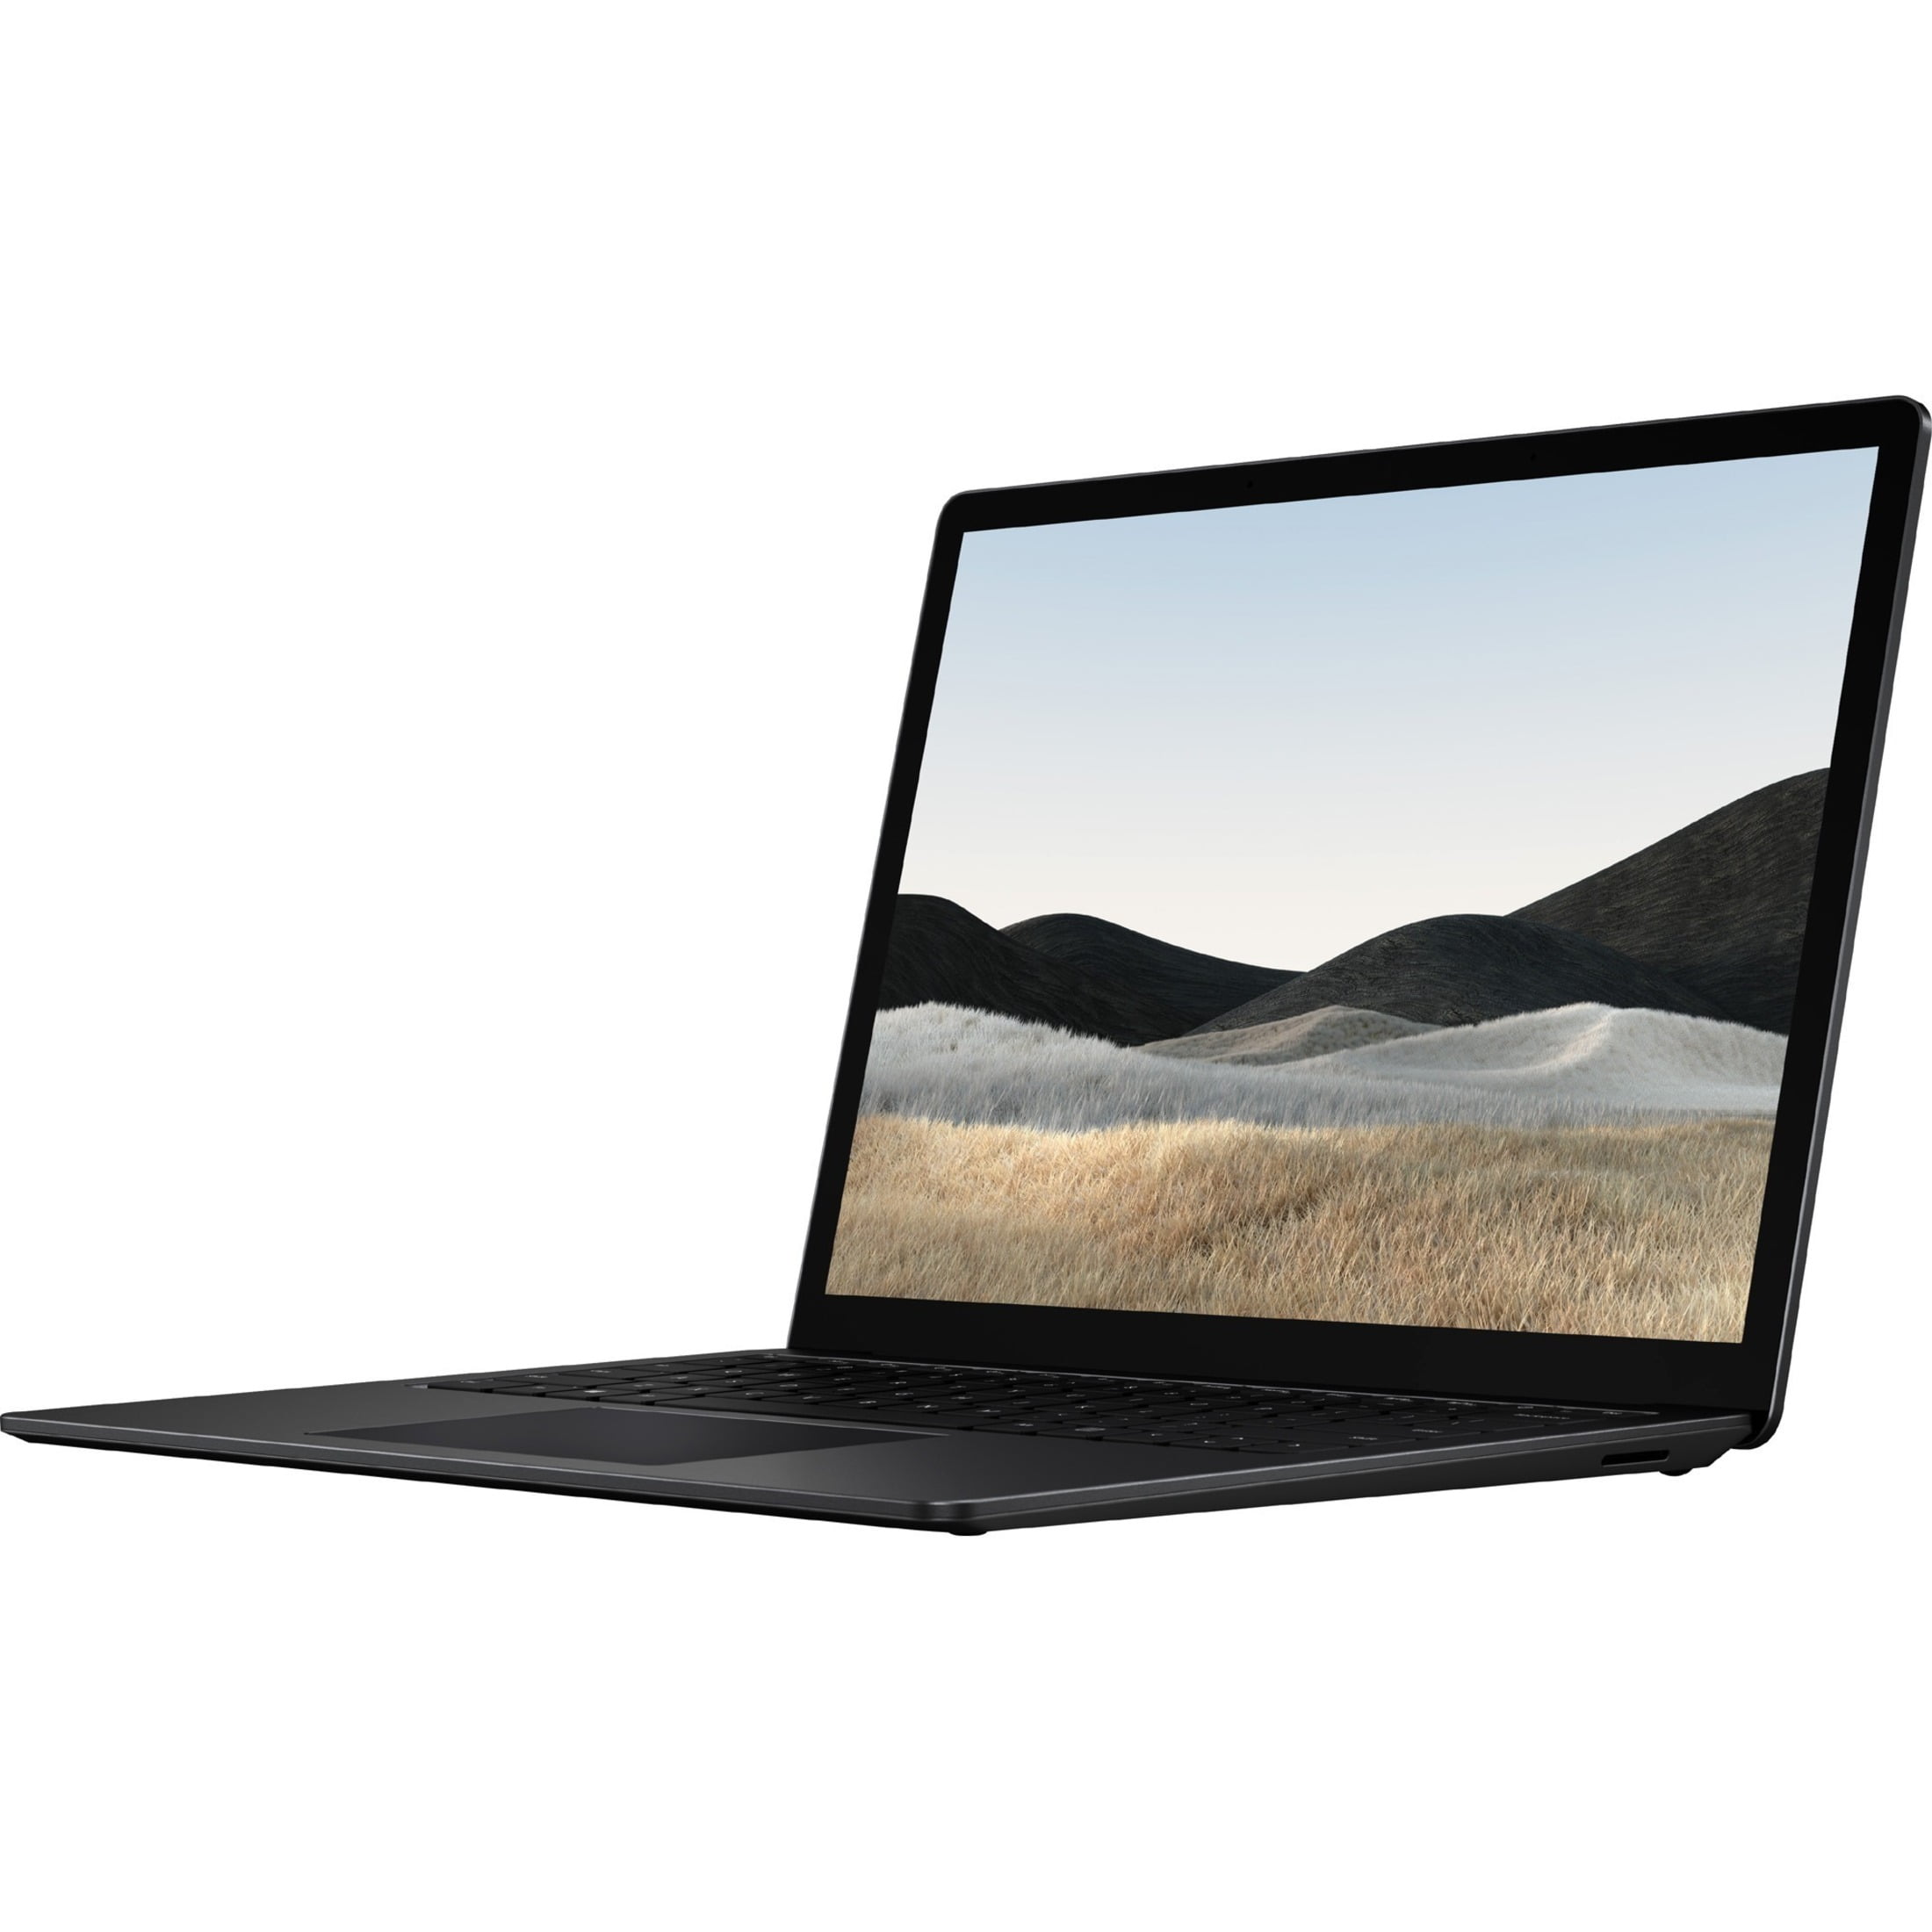 Specialisere heks Korrespondent Microsoft Surface Laptop 4 13.5" Touchscreen Laptop, AMD Ryzen 7 4980U,  512GB SSD, Windows 10 - Walmart.com